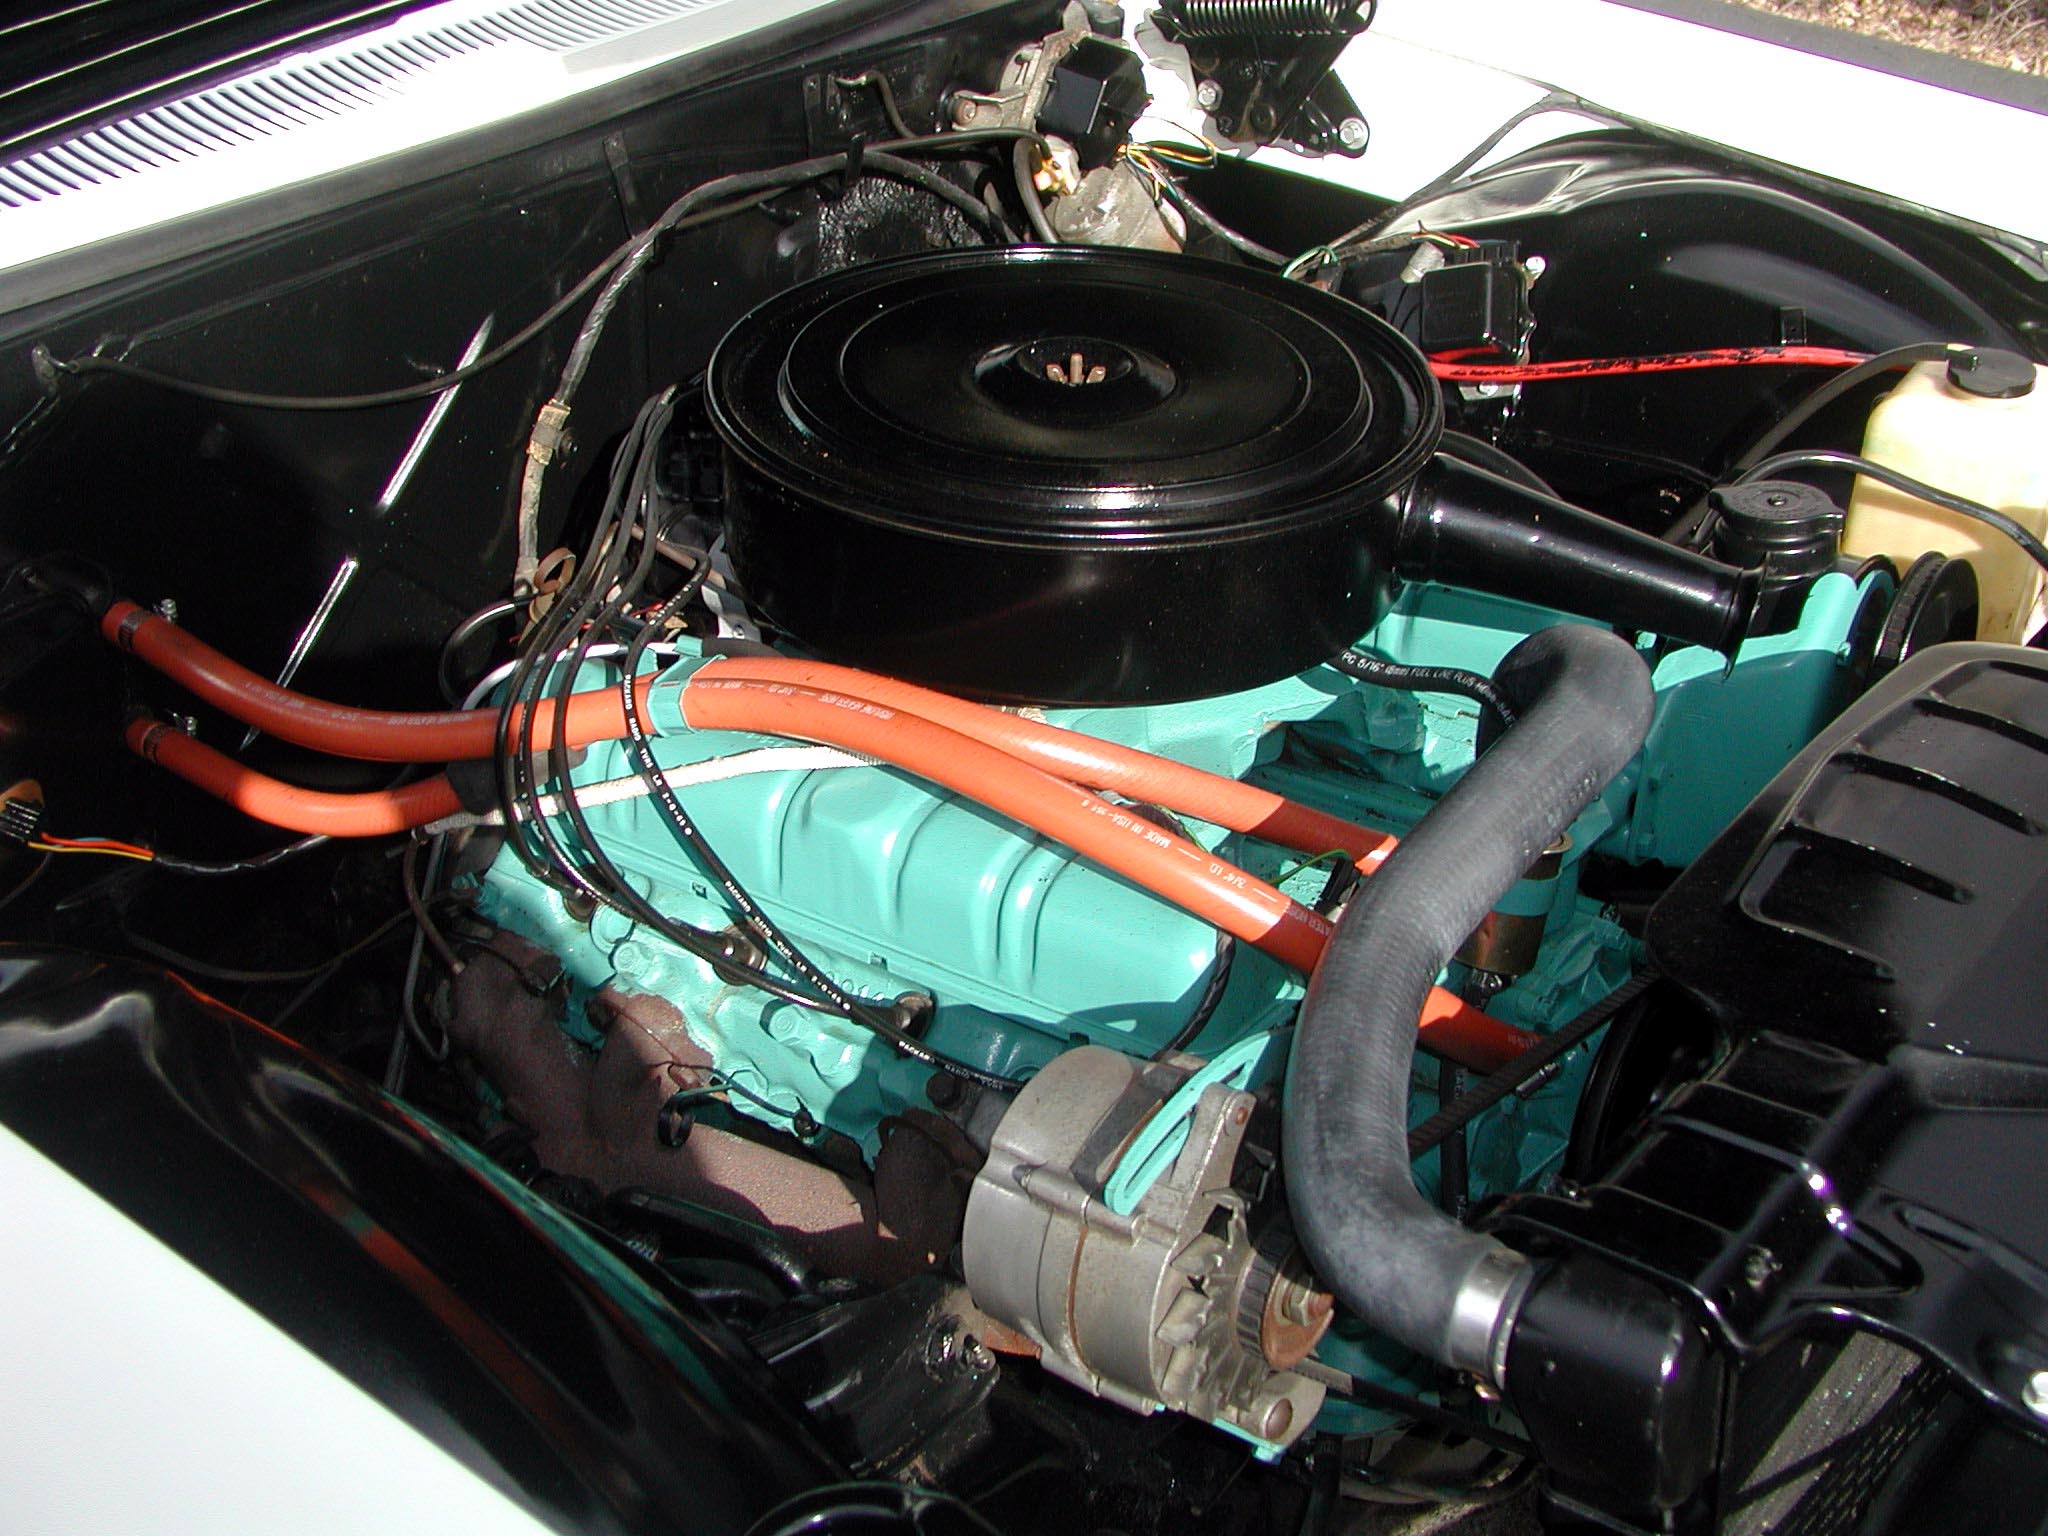 1966 buick electra 225 custom